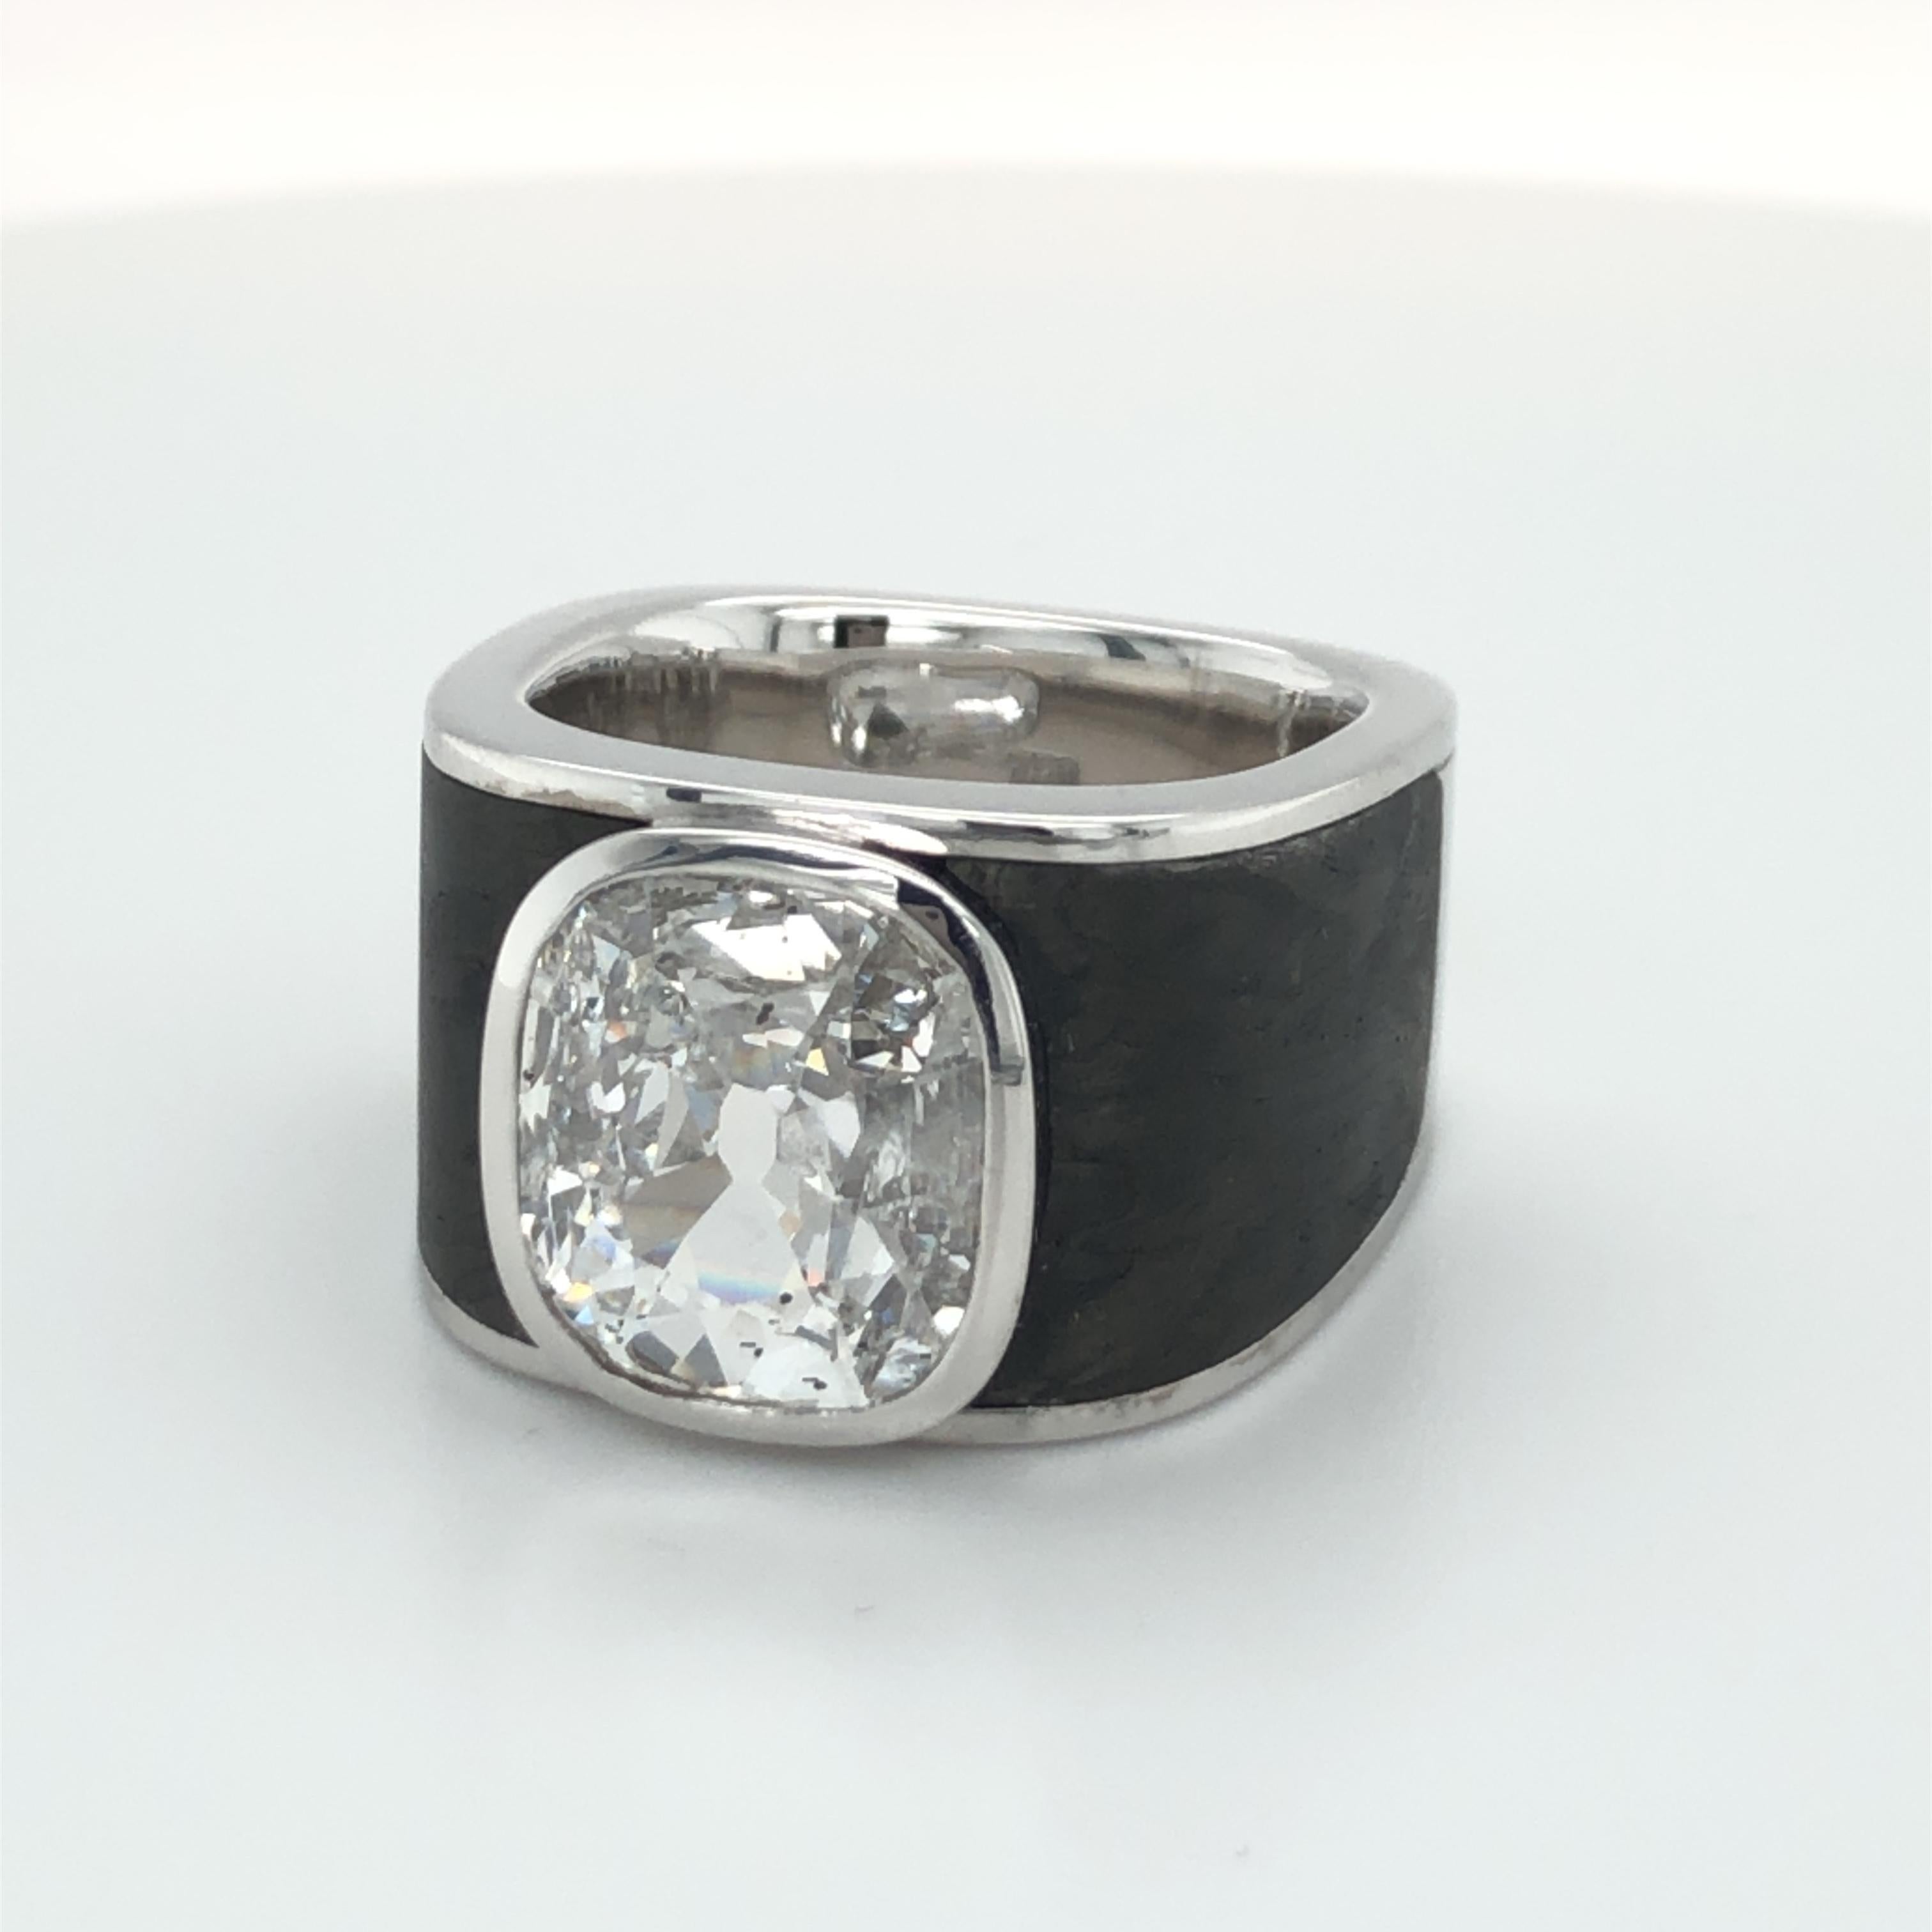 Cushion Cut Binder Moerisch 3.41 Carat Diamond Ring in 18 Karat White Gold and Carbon